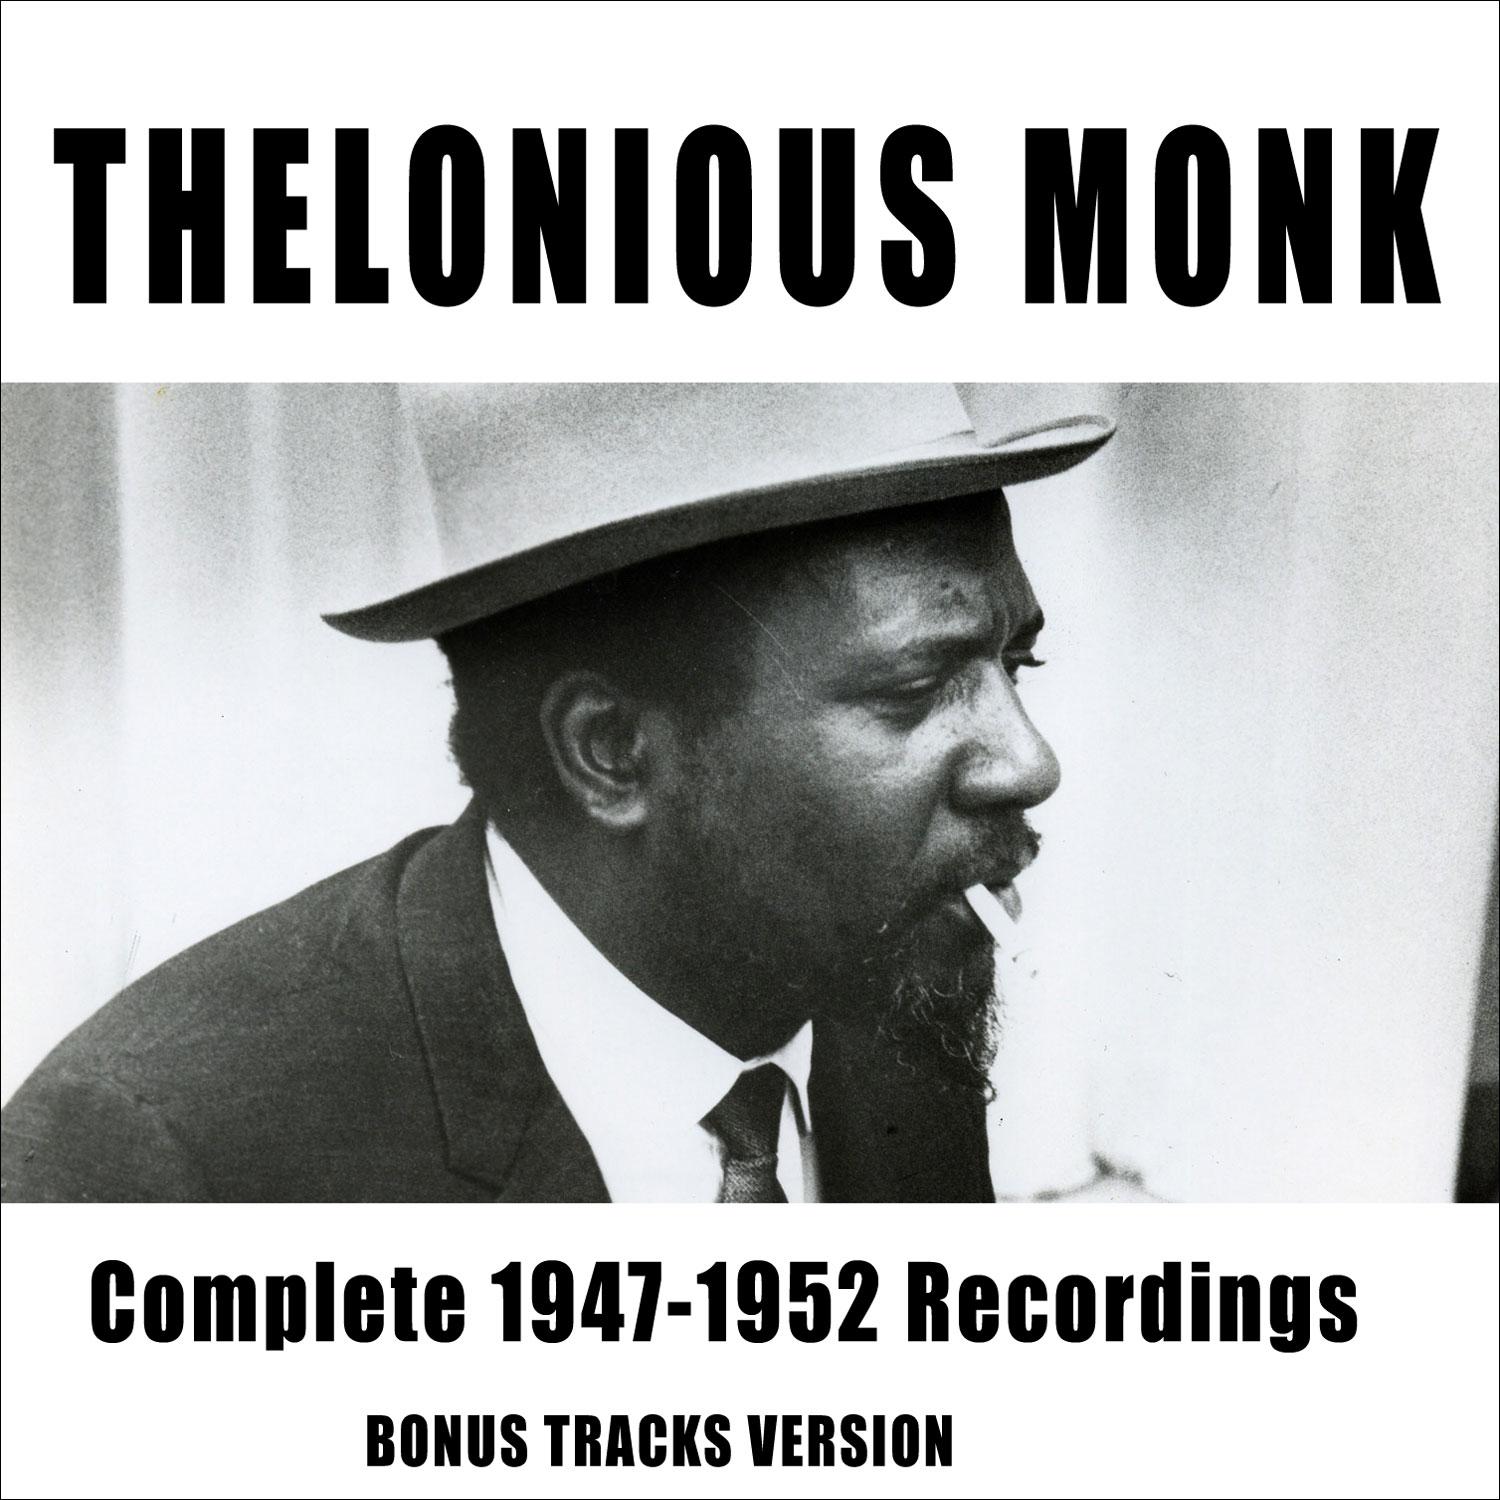 Complete 1947-1952 Recordings (Bonus Track Version)